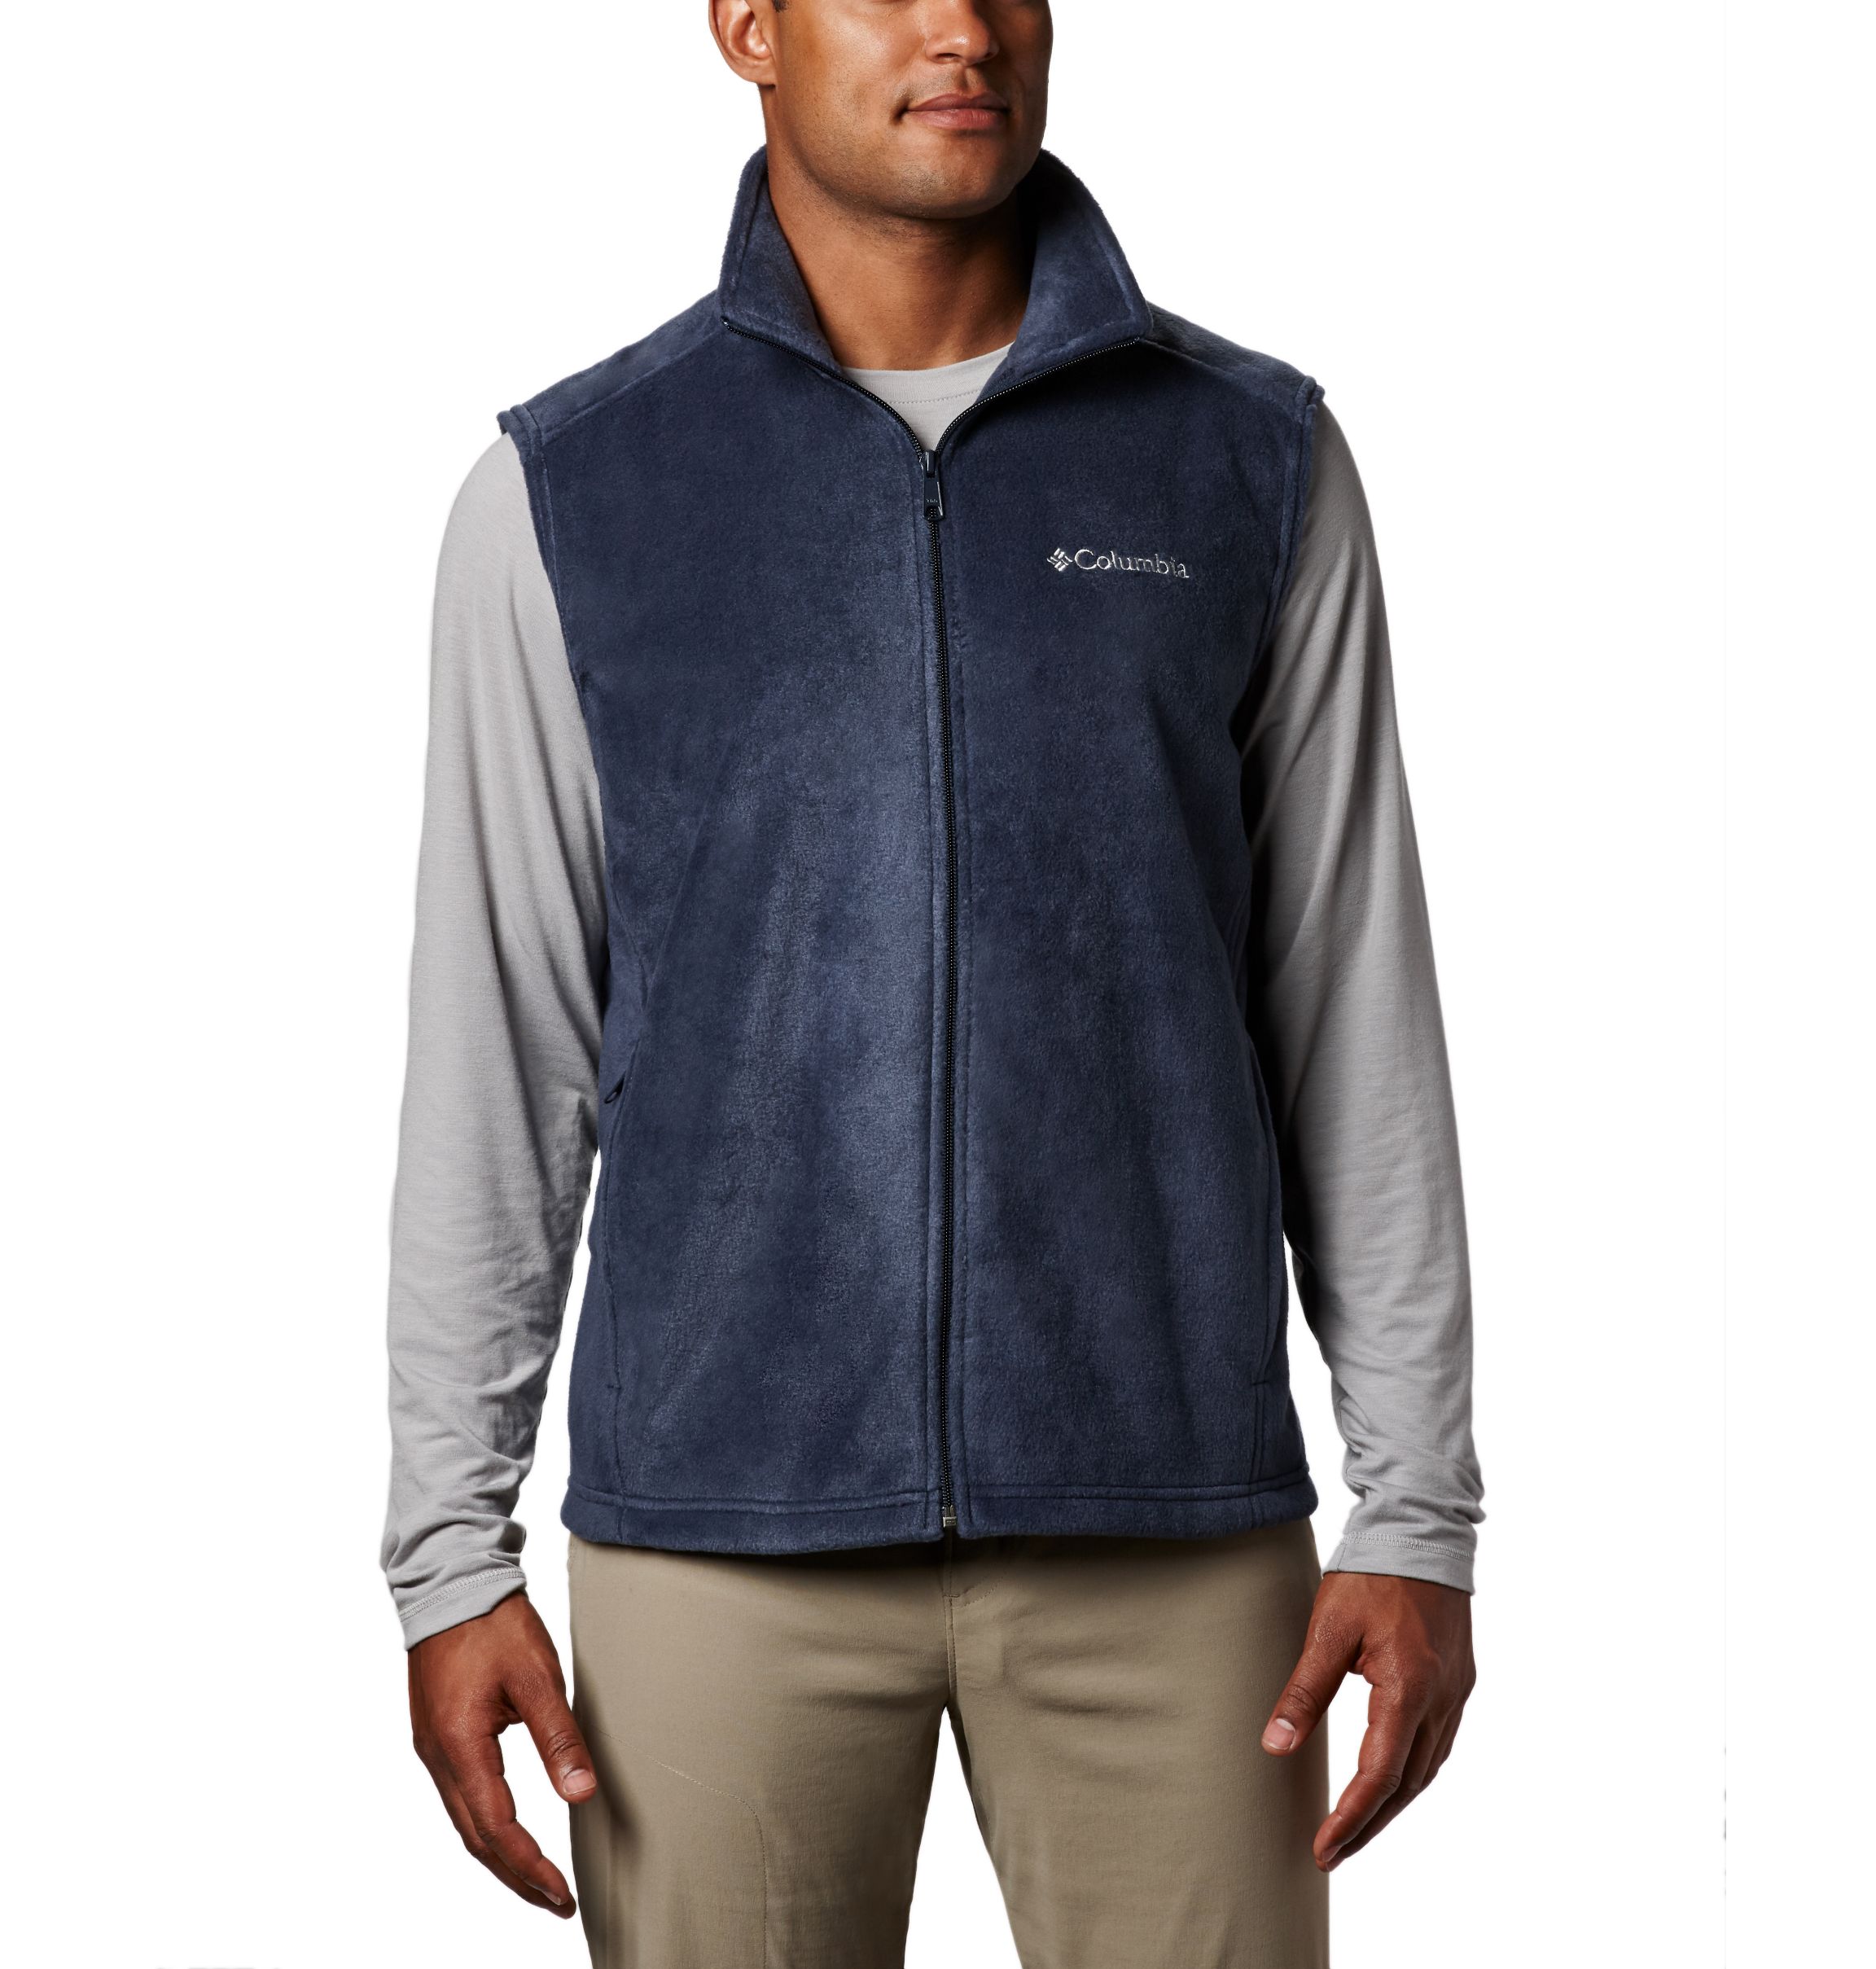 Men's Columbia fleece vest - Pagliacci's